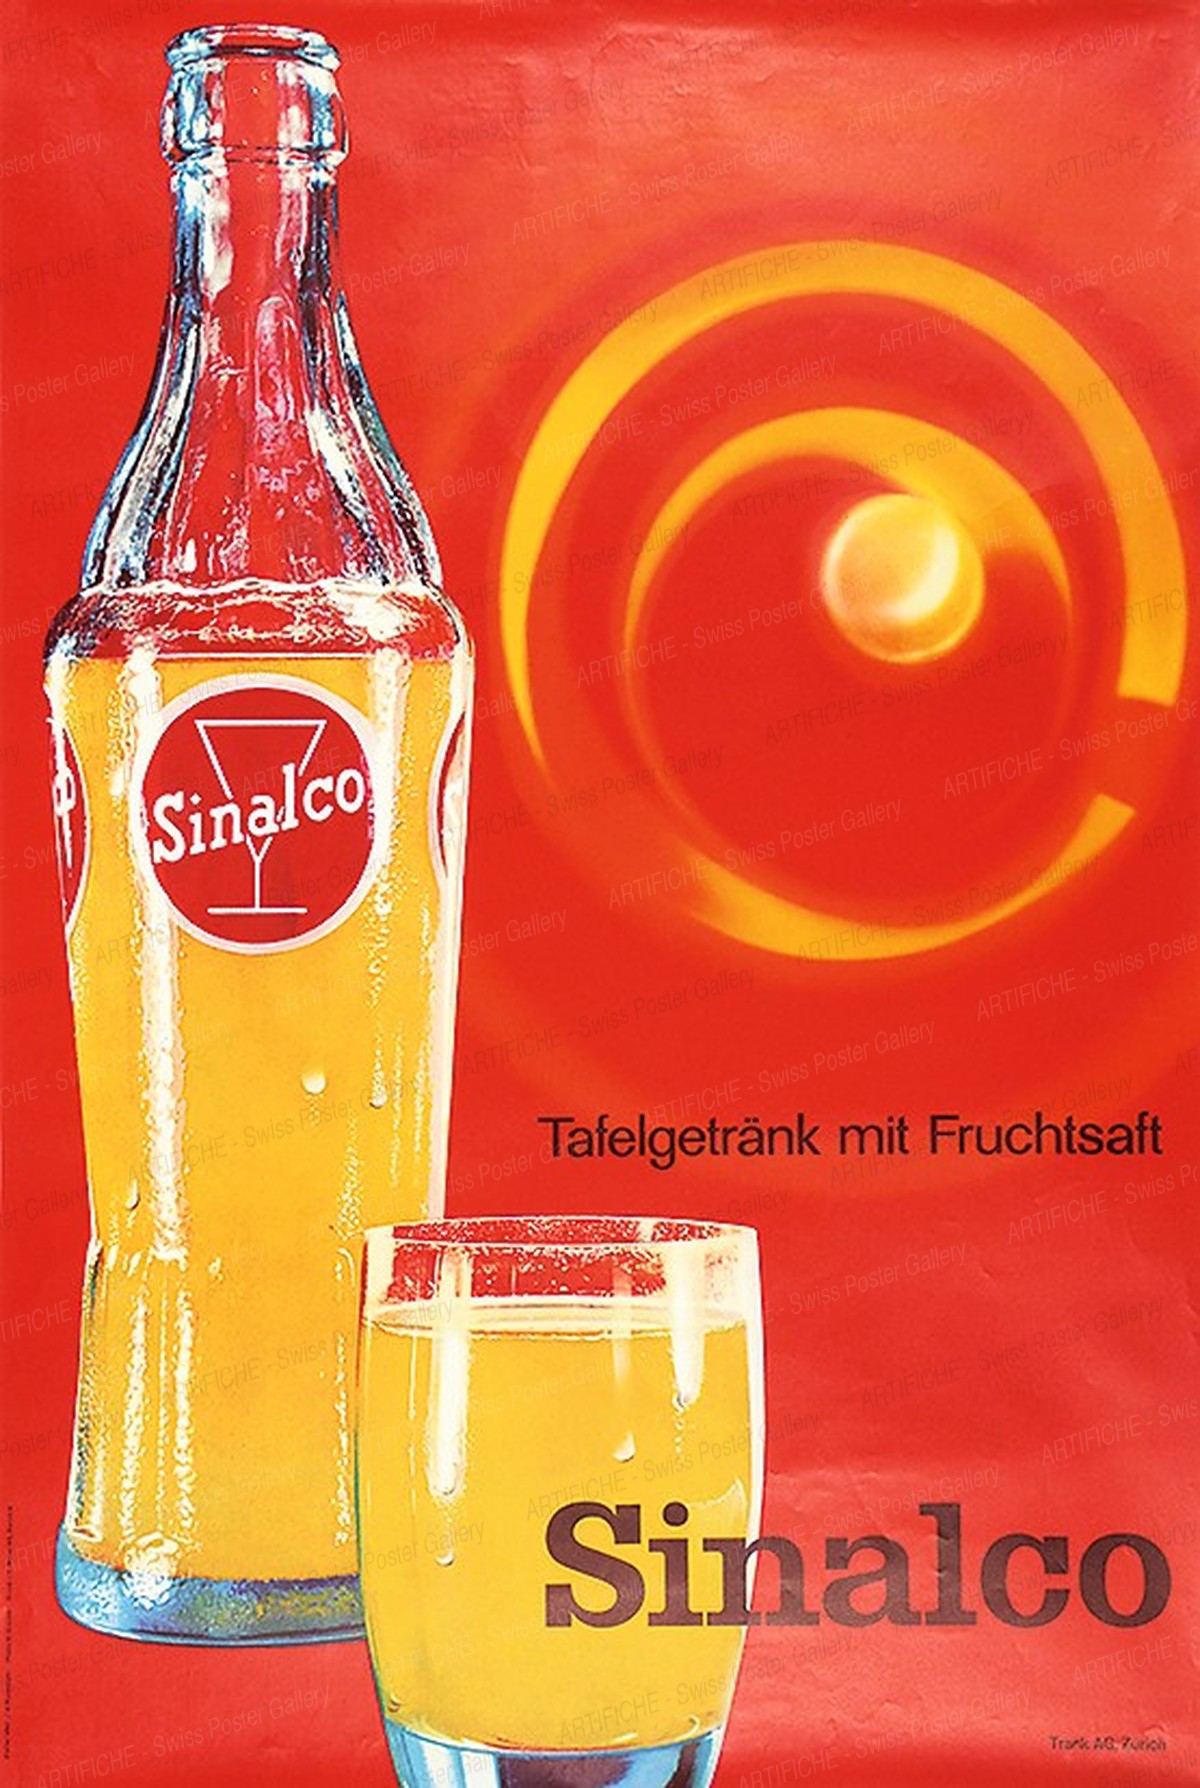 Sinalco Tafelgetränk mit Fruchtsaft, Alfons Ruckstuhl